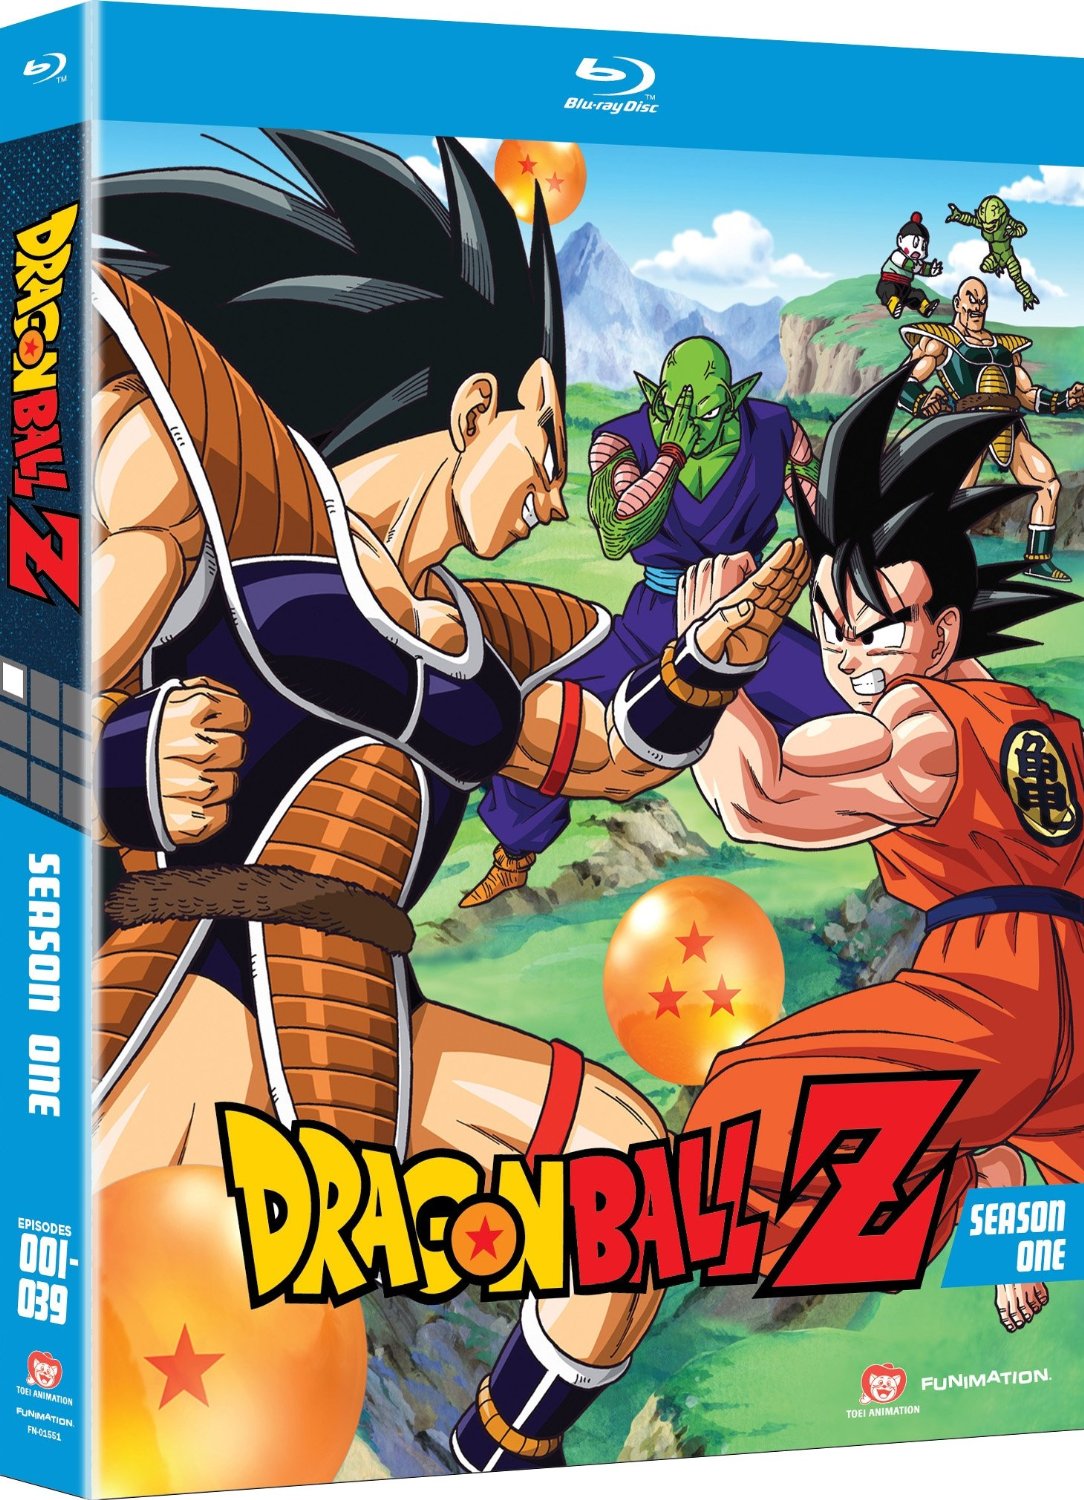 Dragon Ball Z Anime (Blu-Ray) (DBZ) Season 1